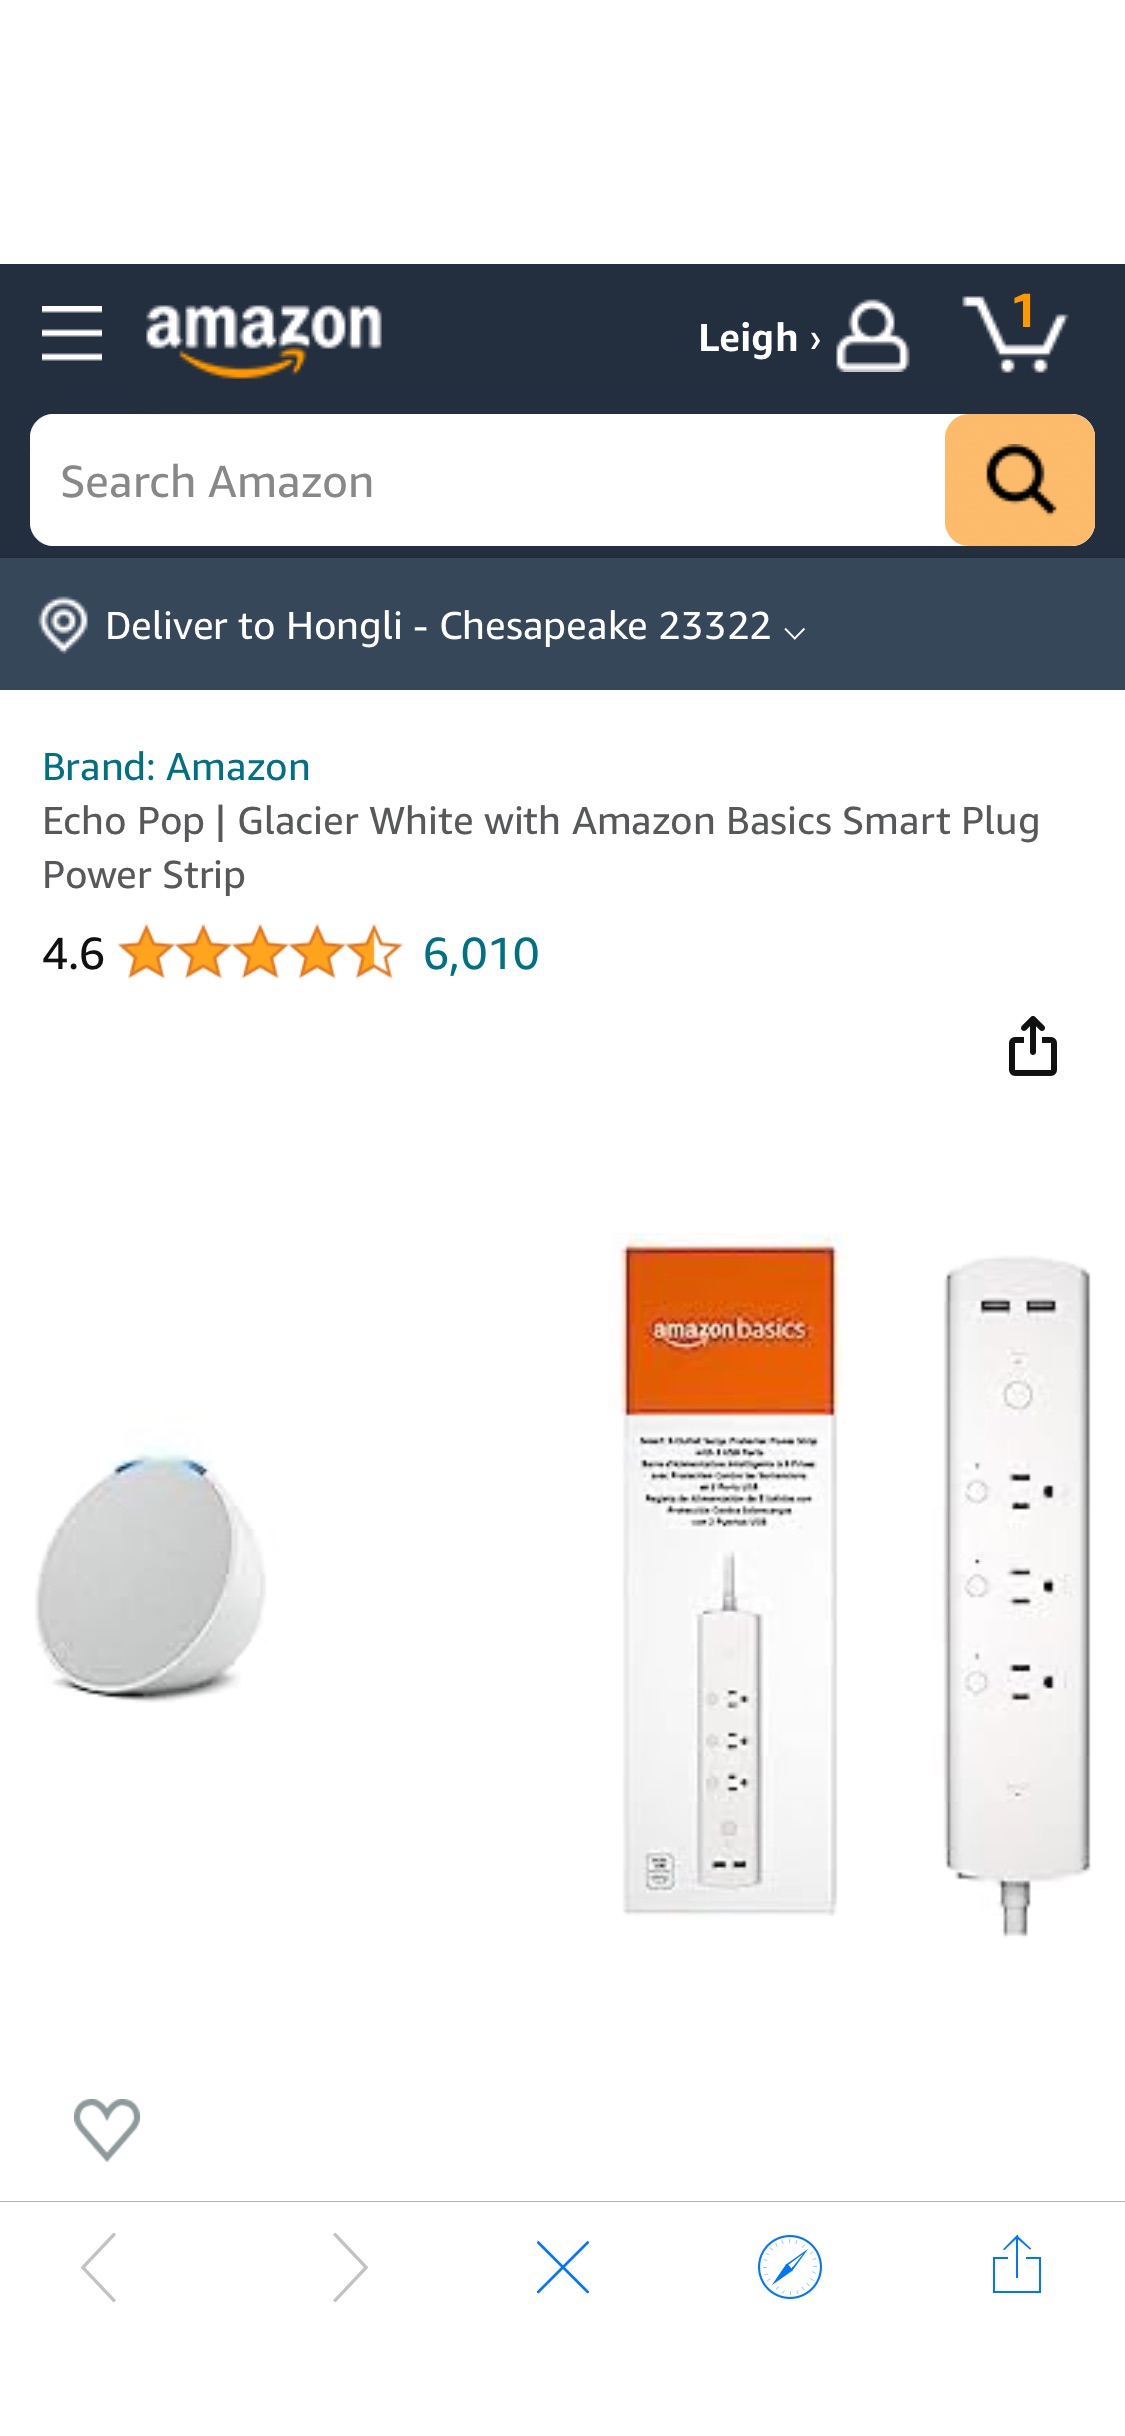 Amazon.com: Echo Pop | Glacier White with Amazon Basics Smart Plug Power Strip : Everything Else